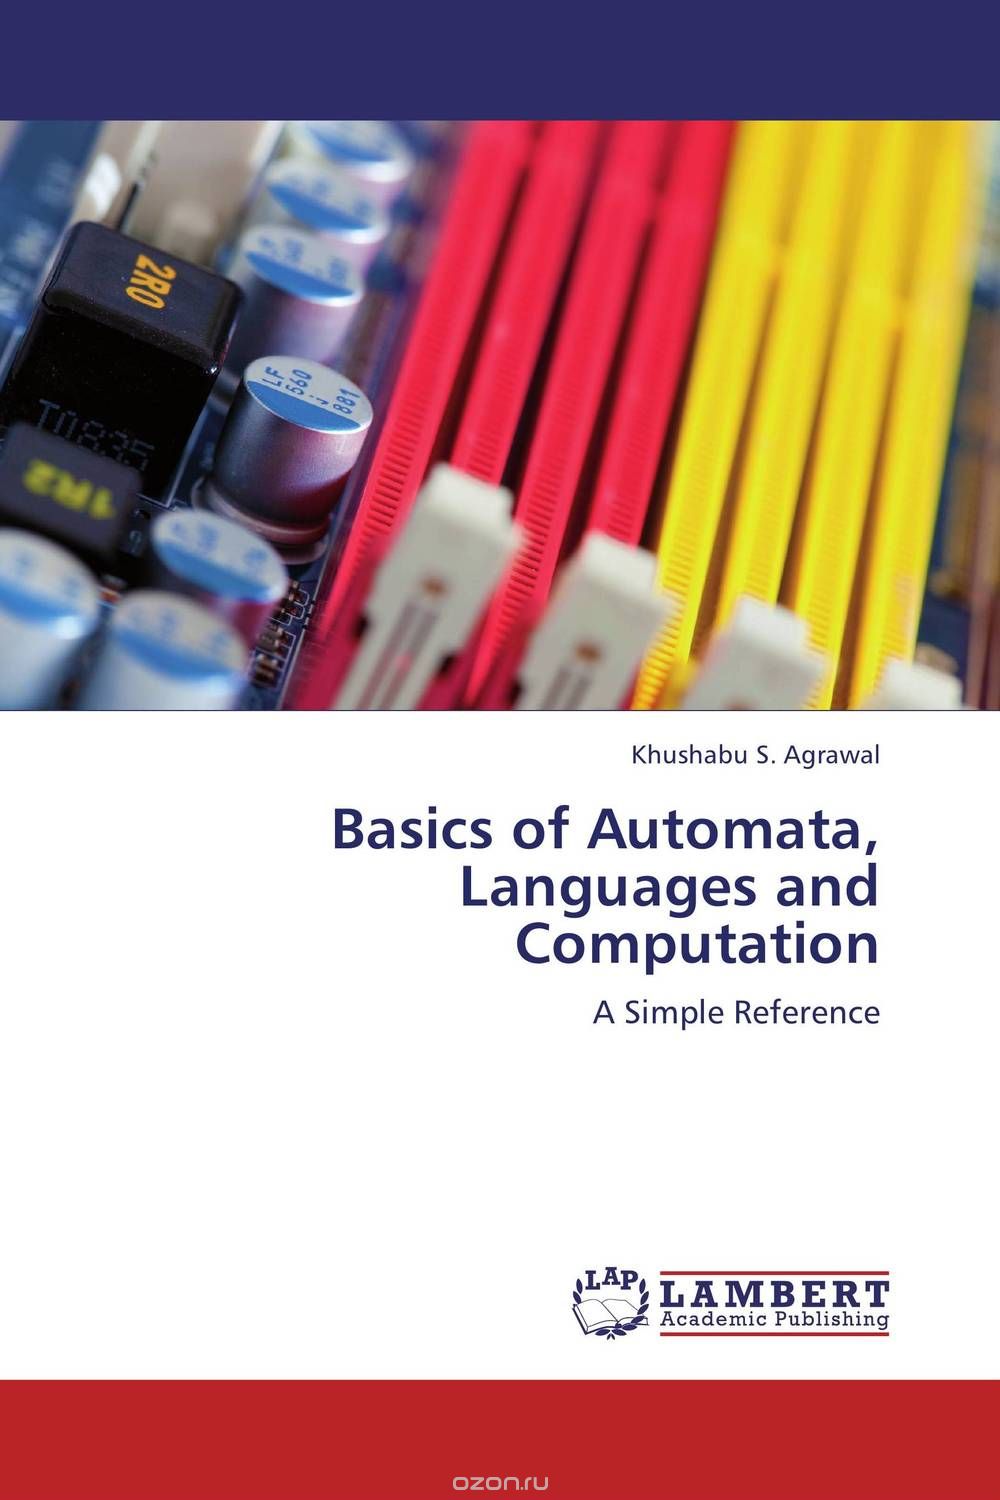 Скачать книгу "Basics of Automata, Languages and Computation"